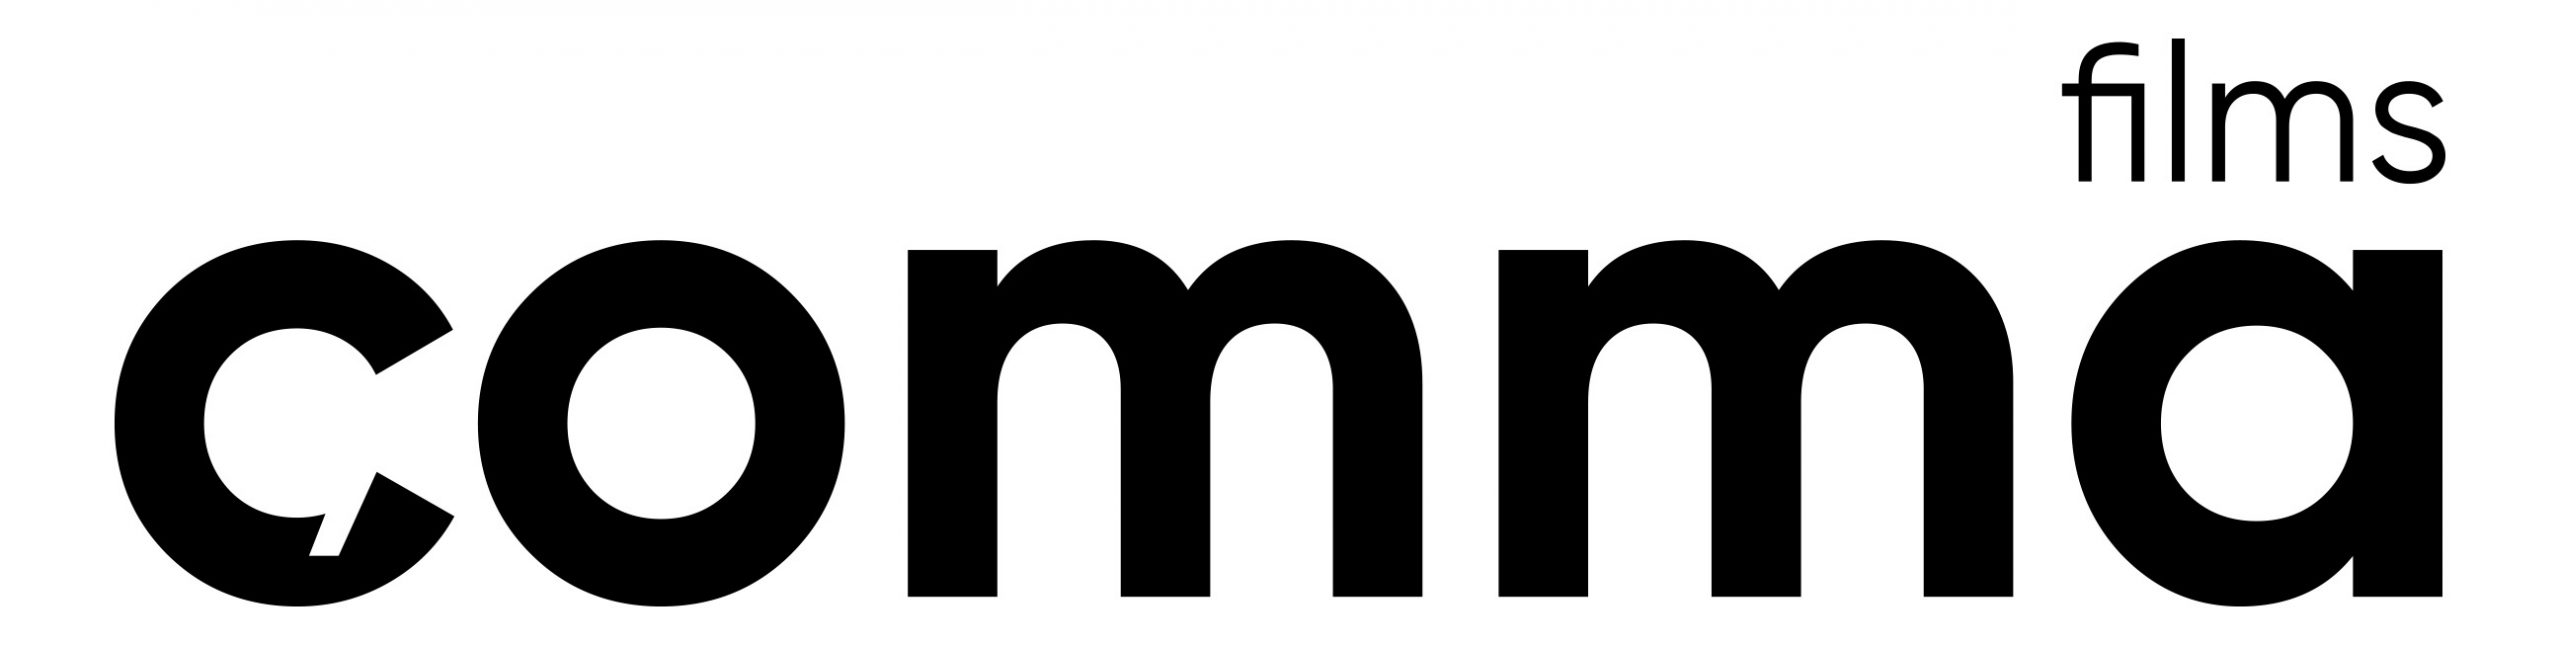 Comma Films logo